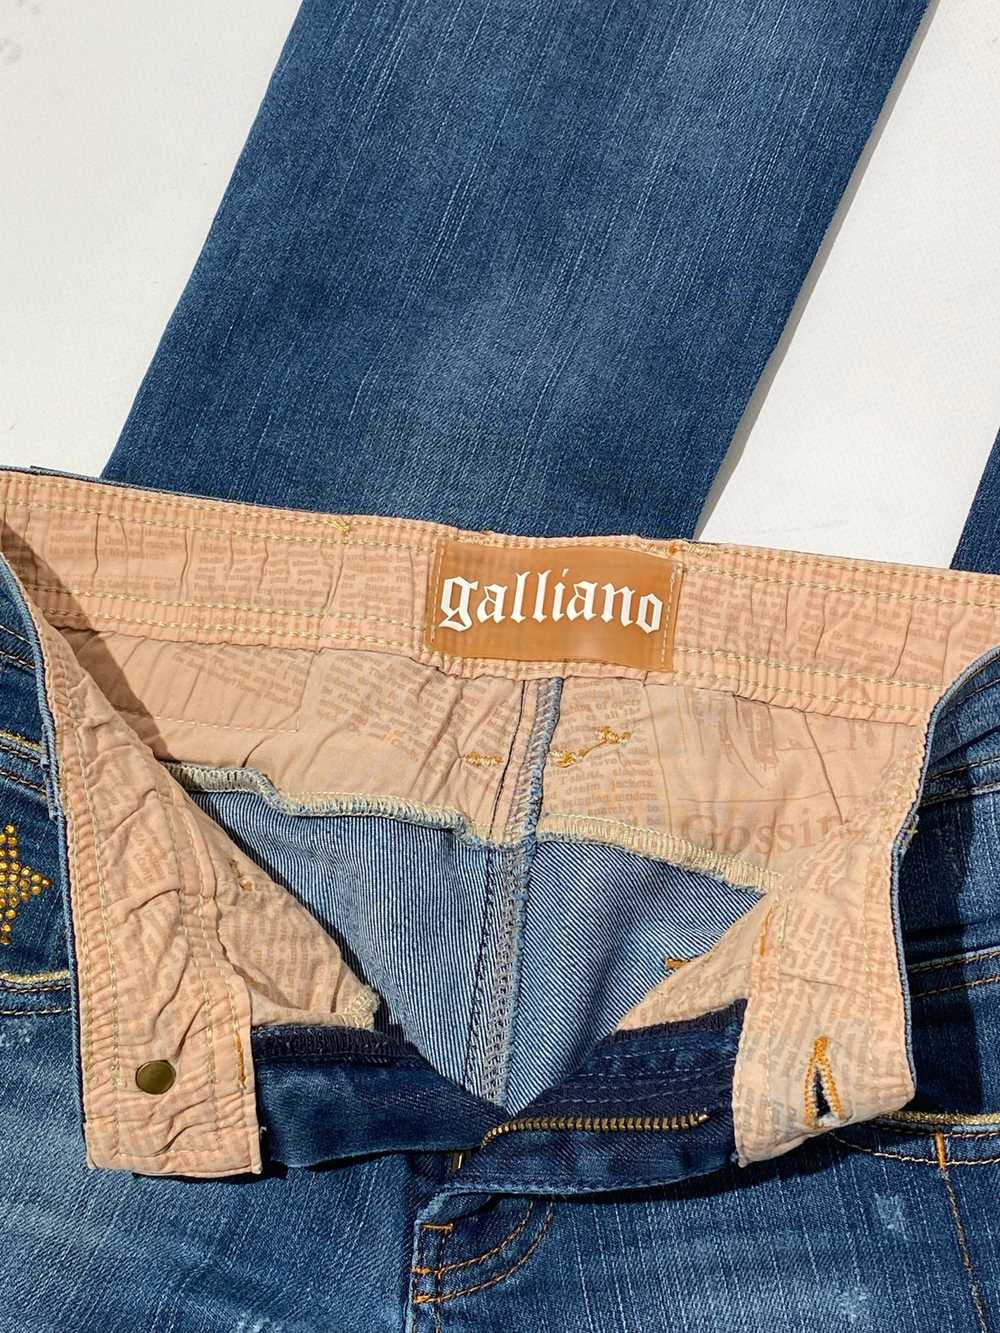 John Galliano John Galliano vintage blue jeans - image 7